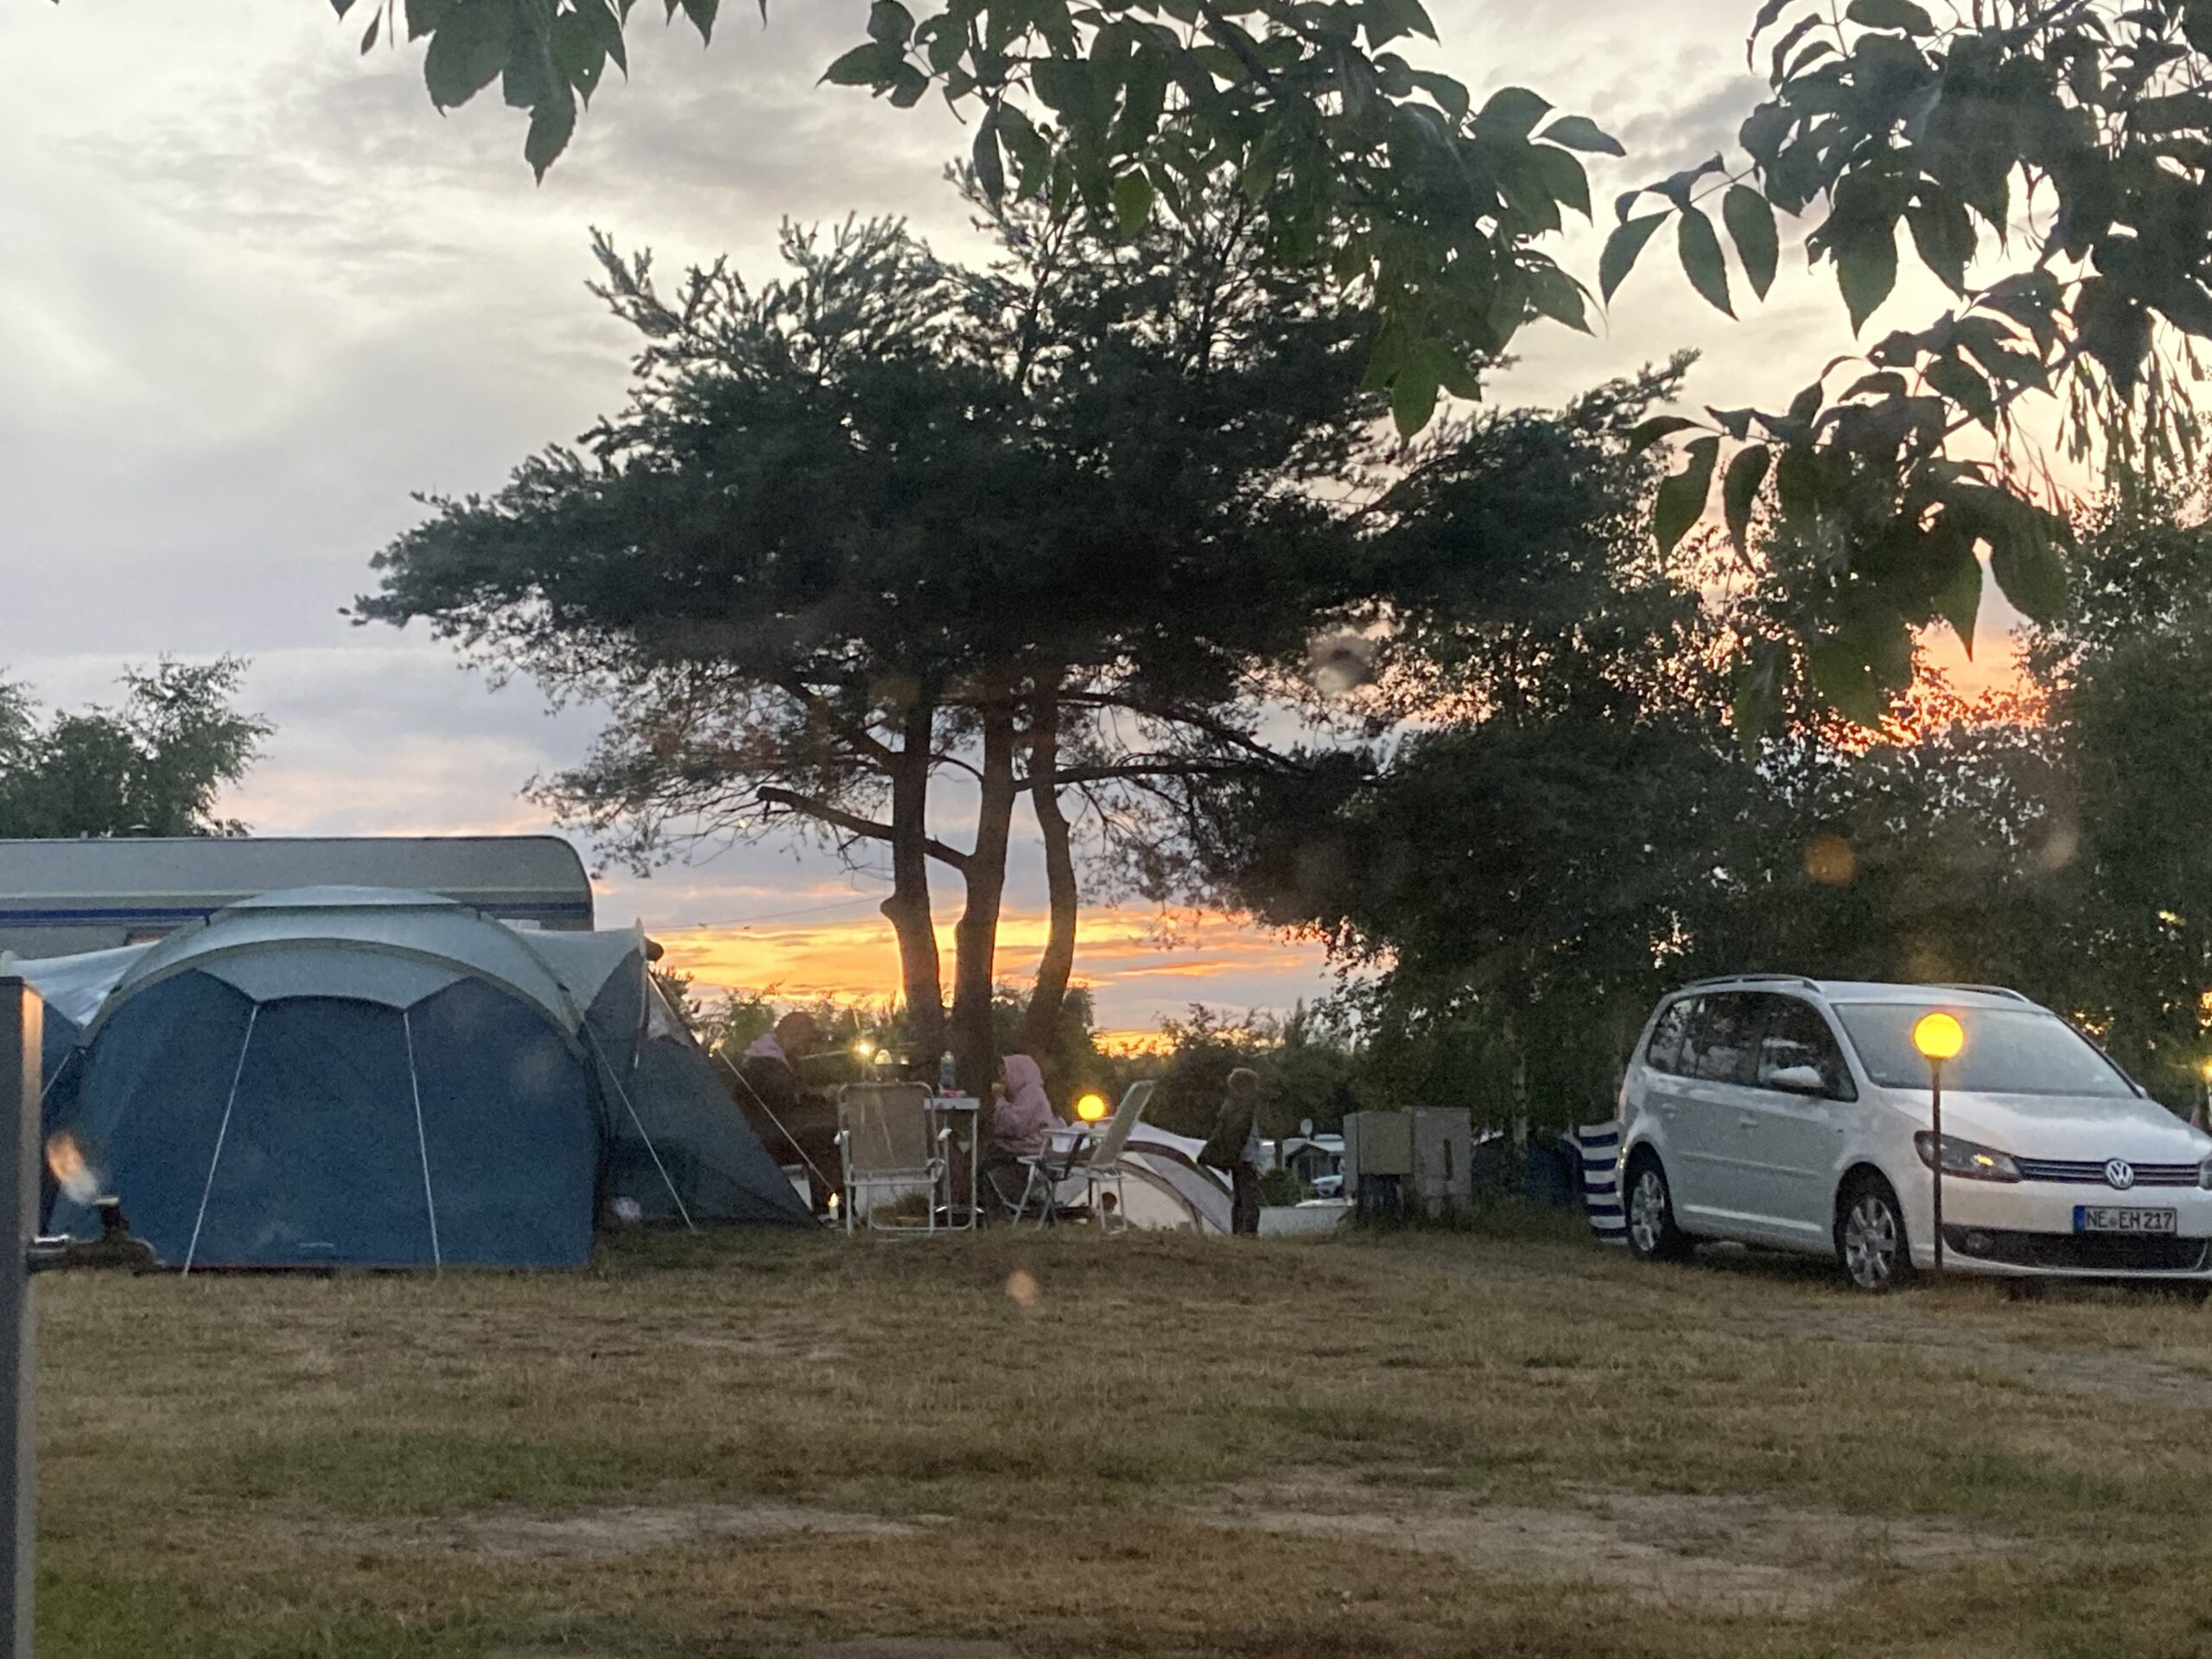 spokojny wieczor na alexa camping